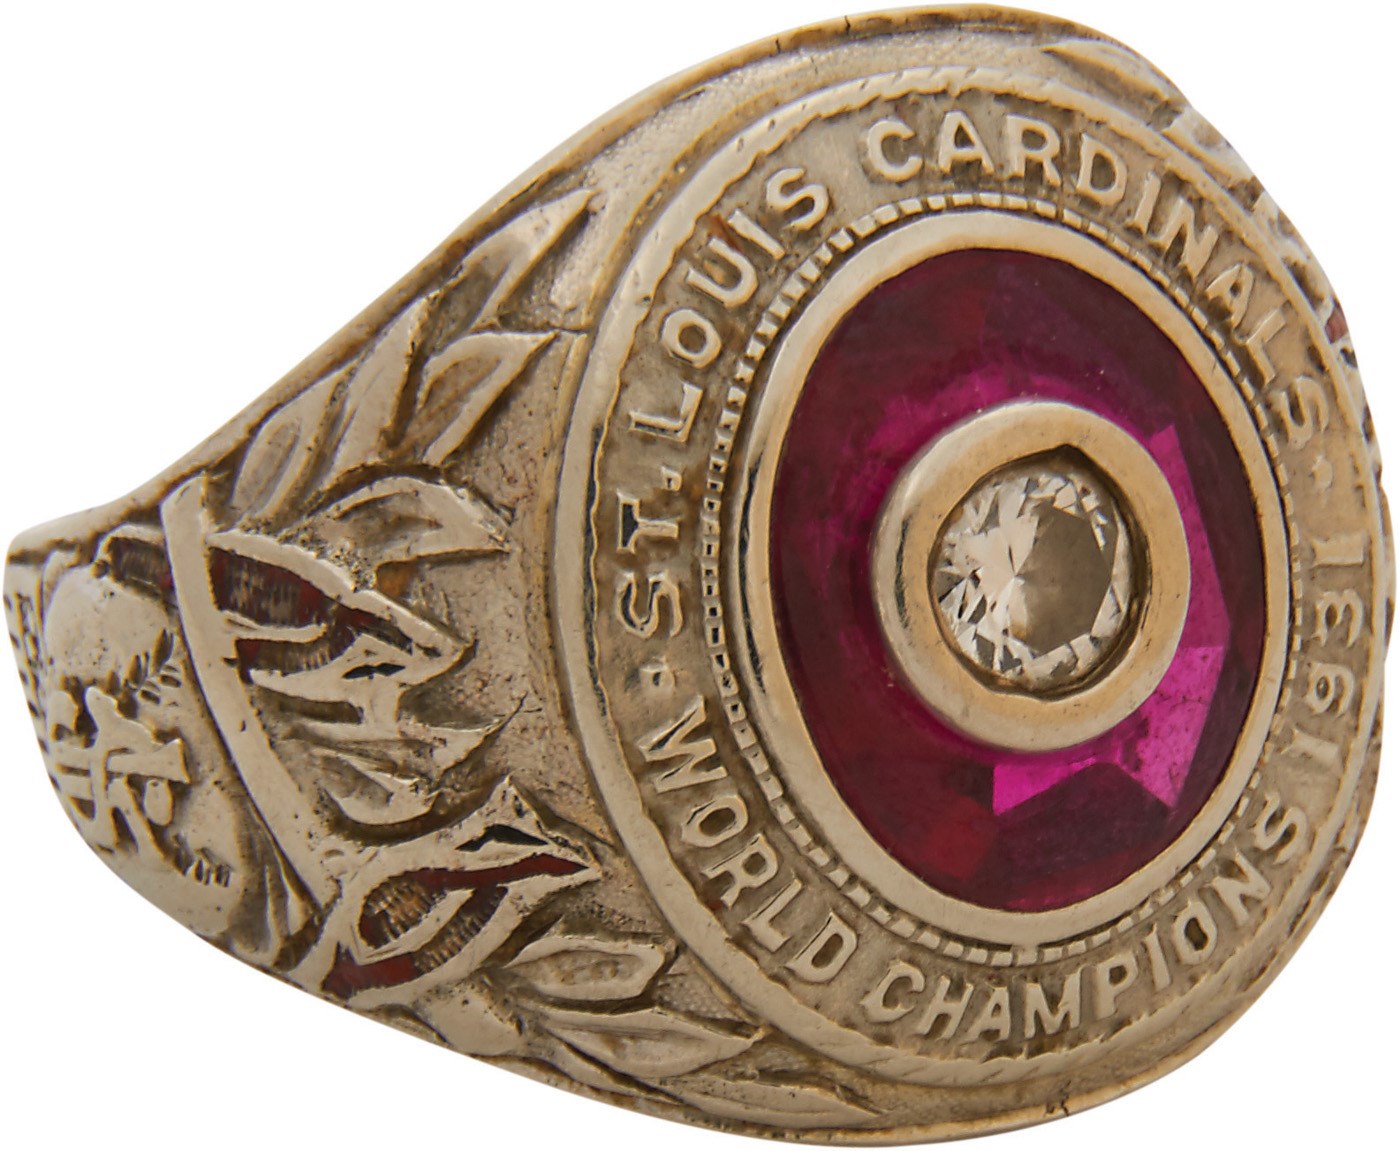 - 1931 St. Louis Cardinals World Series Championship Ring